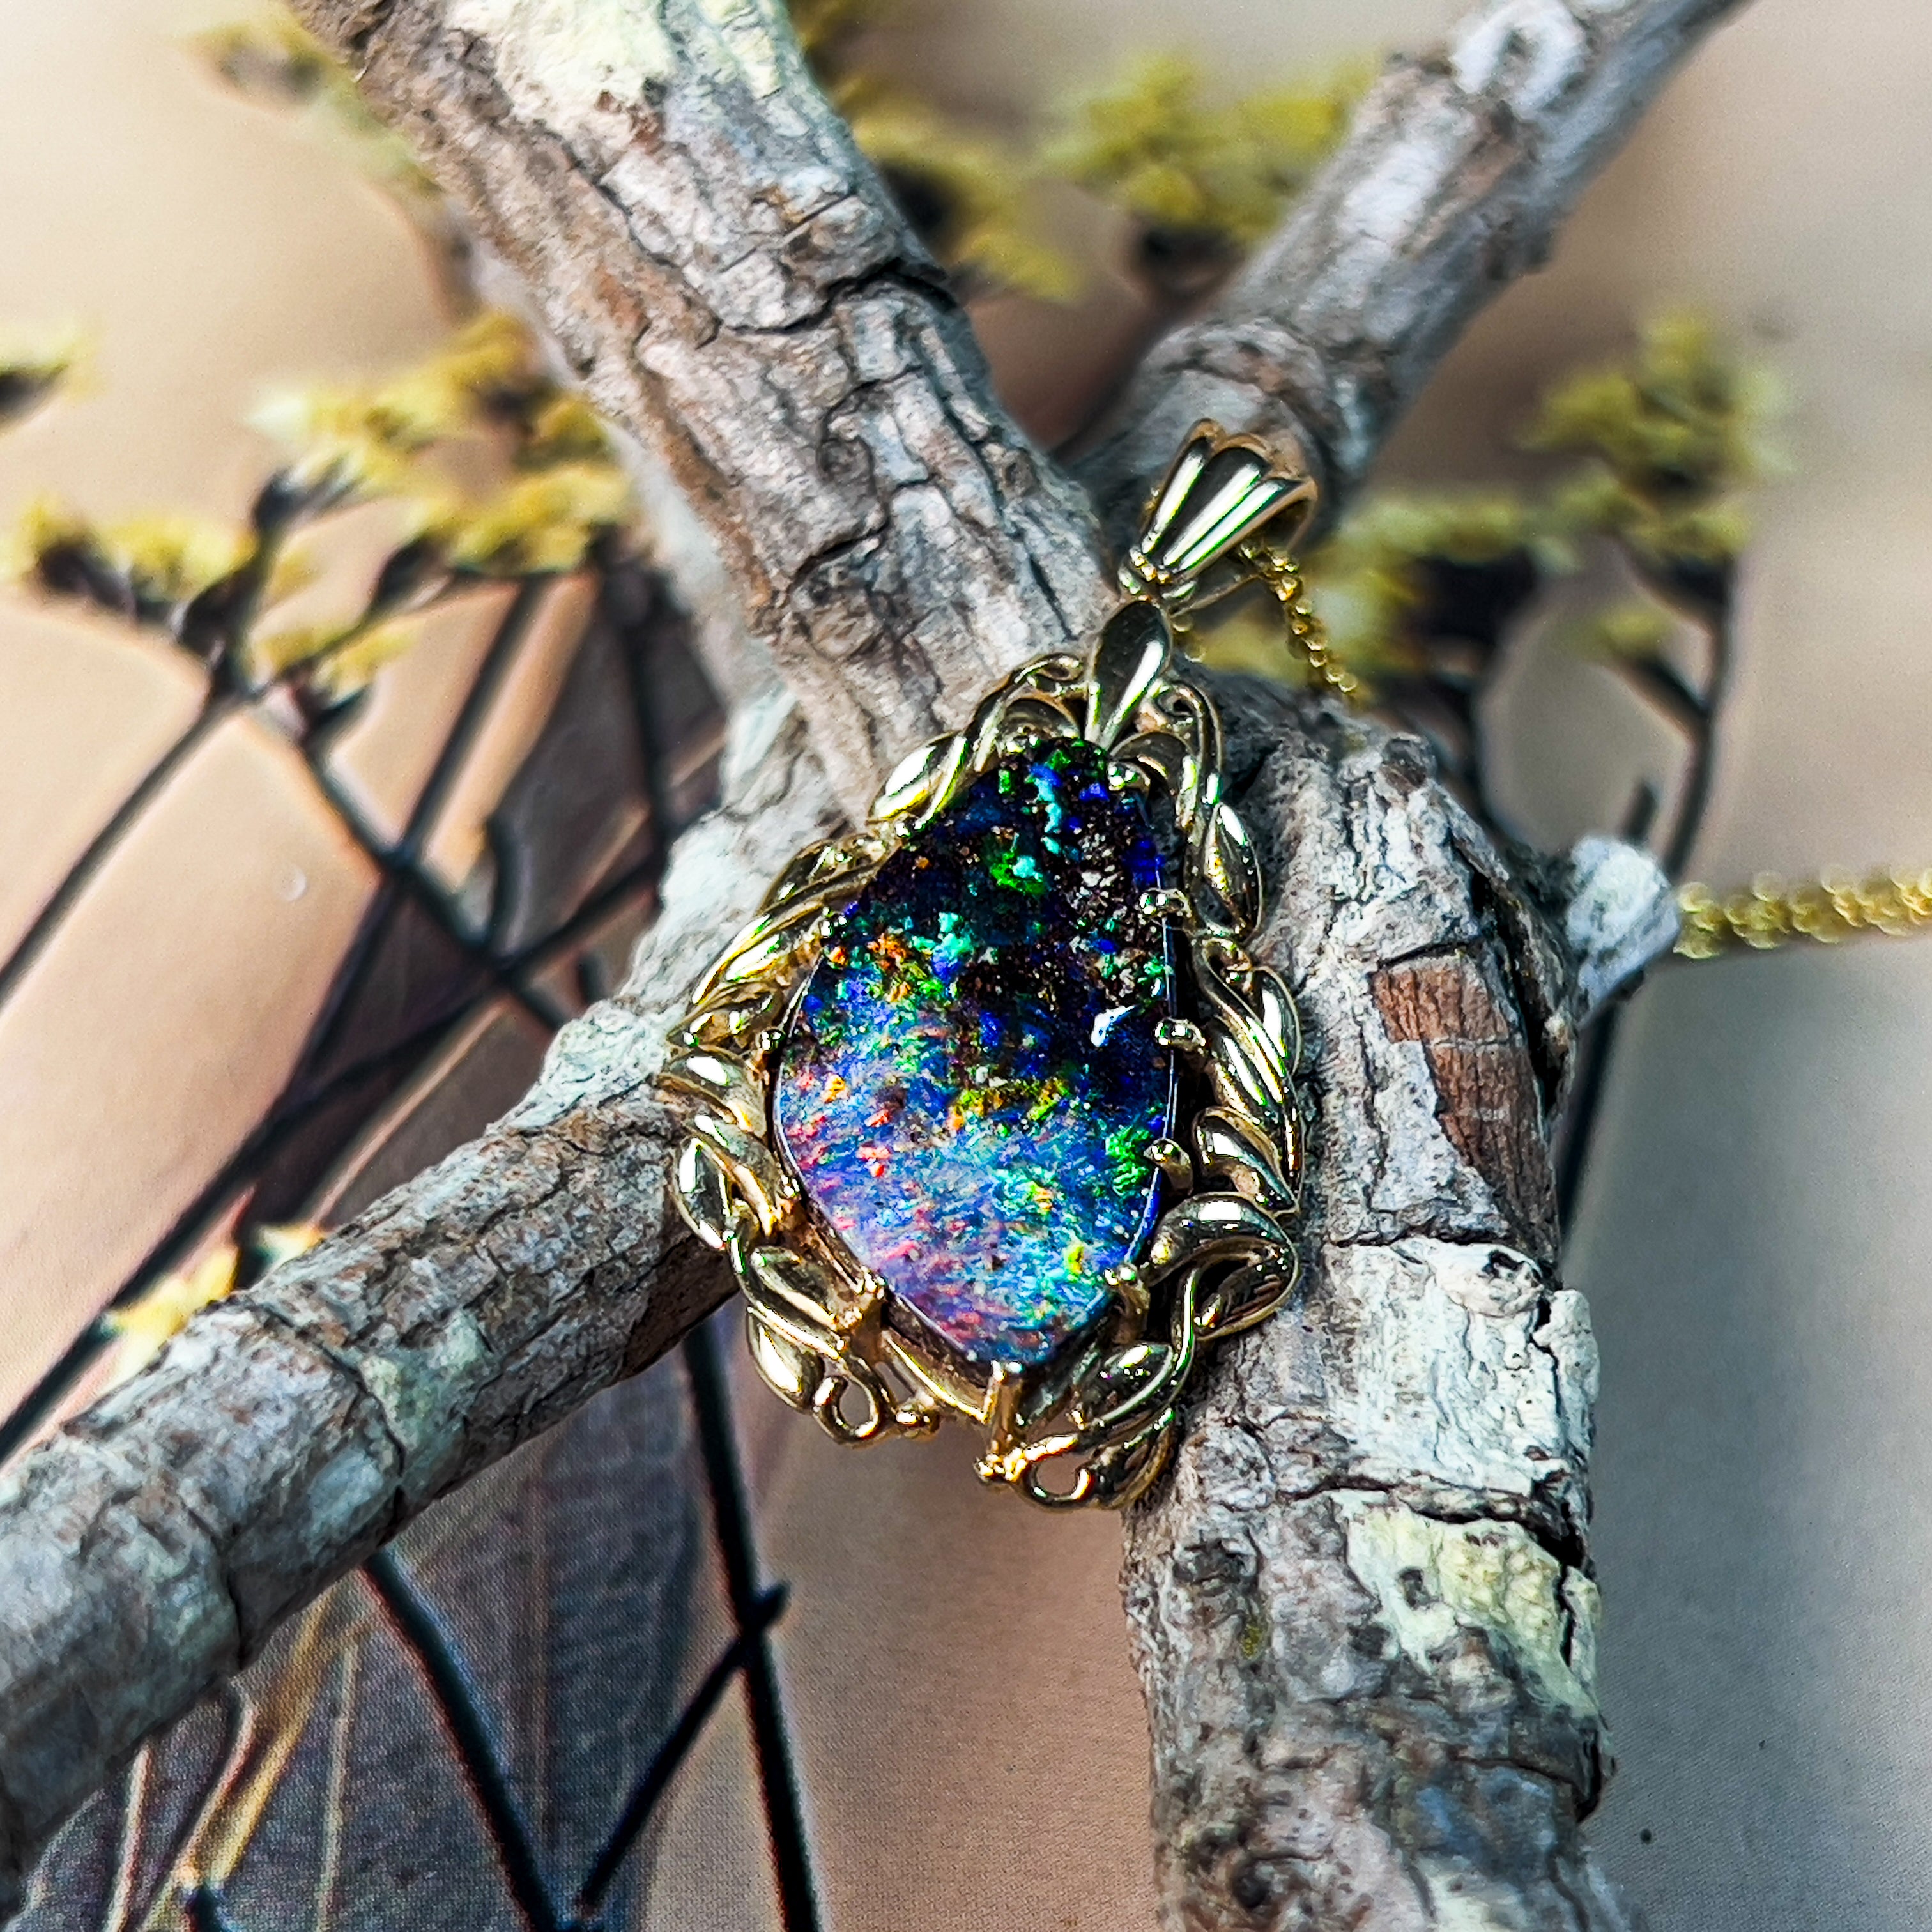 14kt Yellow Gold Boulder Opal 4.86ct pendant - Masterpiece Jewellery Opal & Gems Sydney Australia | Online Shop